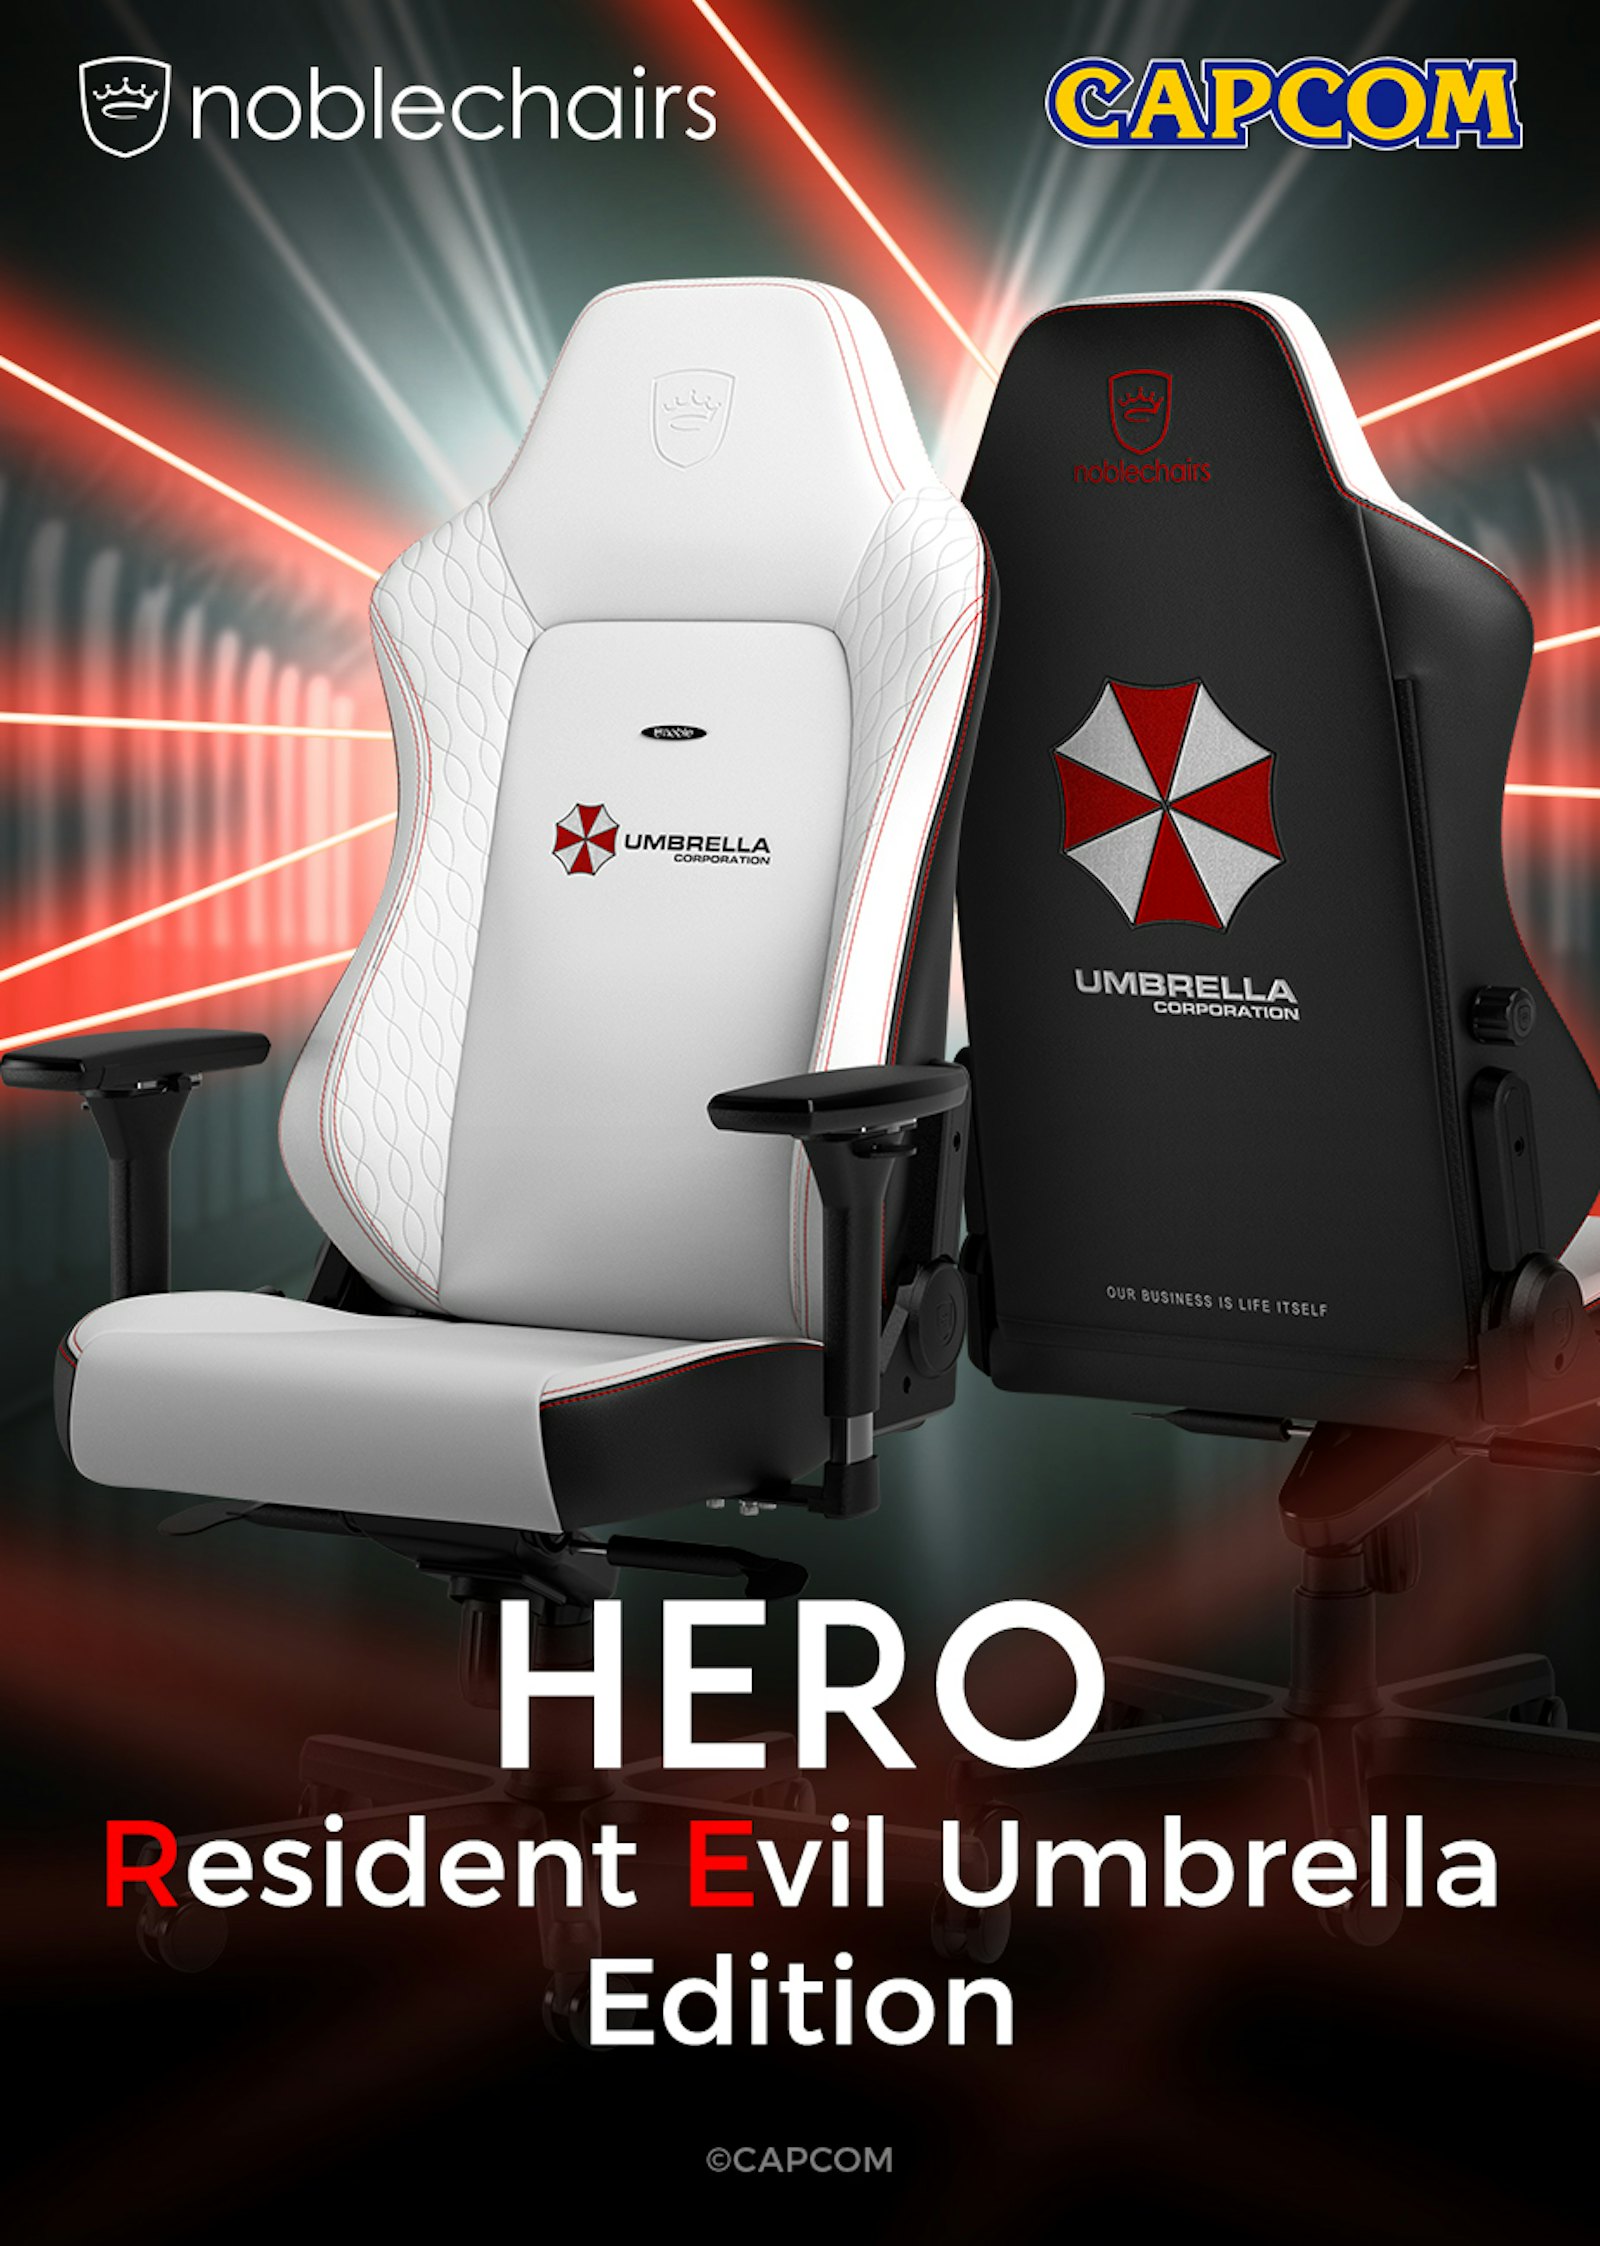 noblechairs HERO - Resident Evil Umbrella Edition